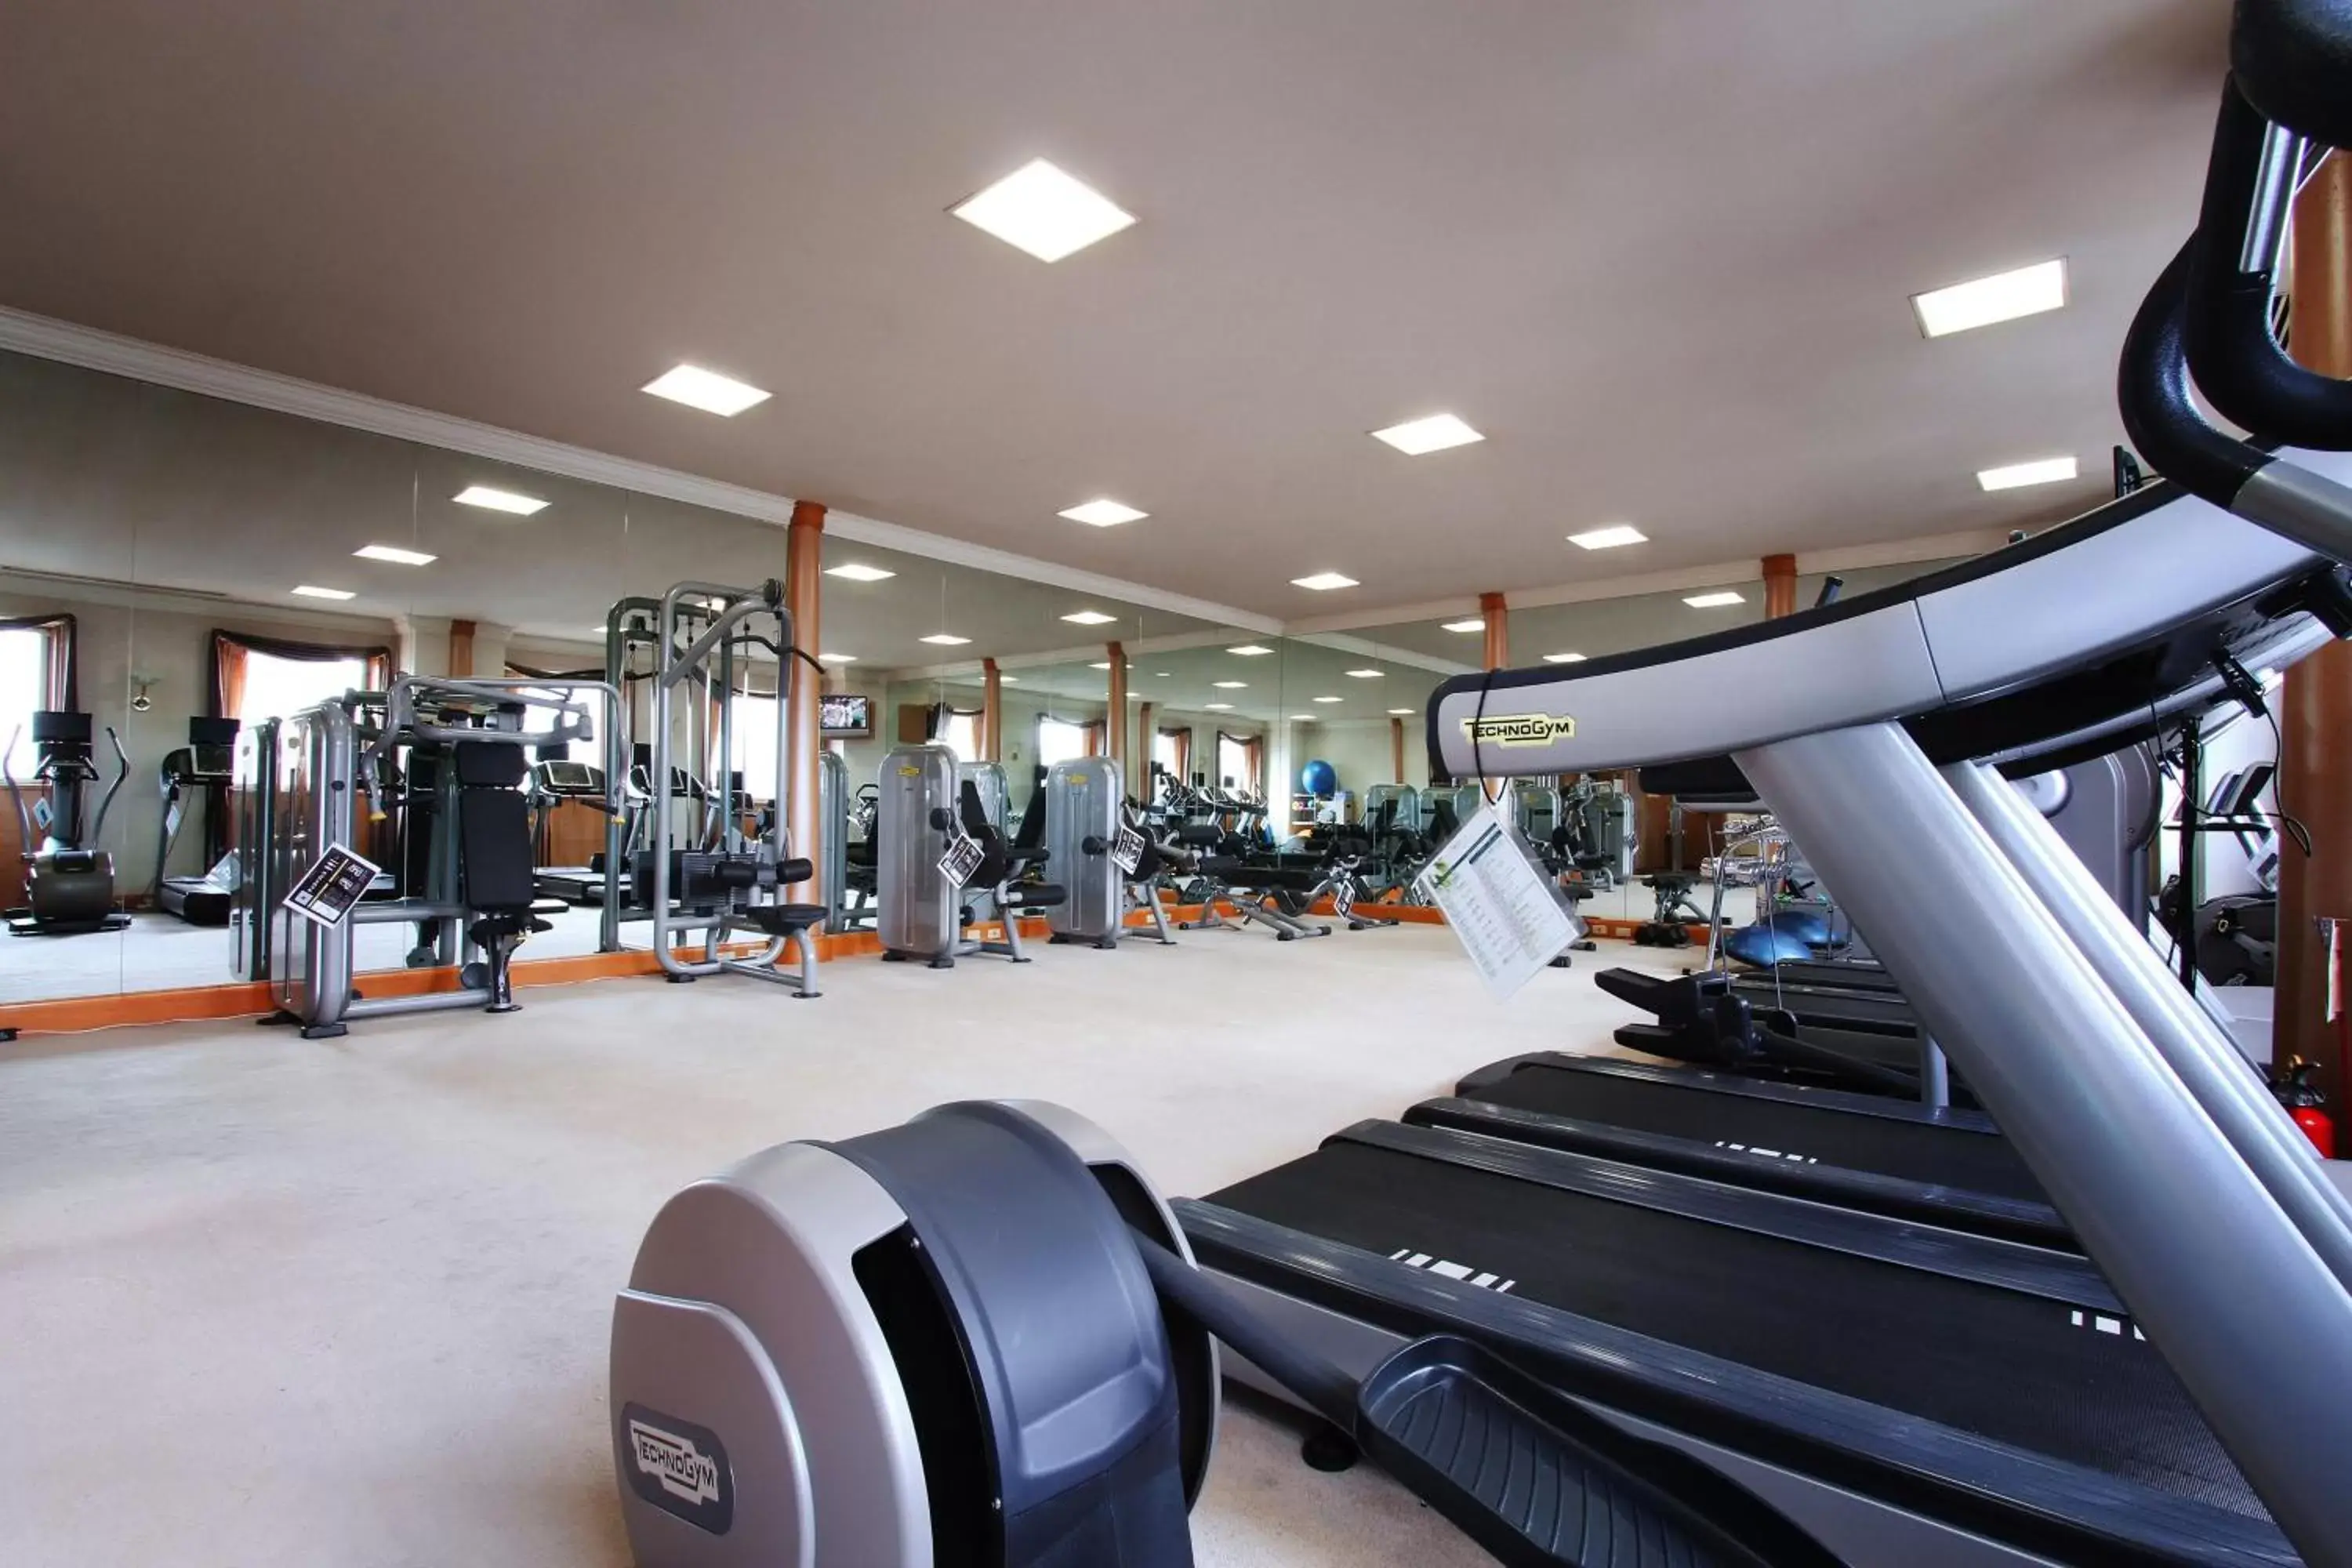 Fitness centre/facilities, Fitness Center/Facilities in The Westin Osaka